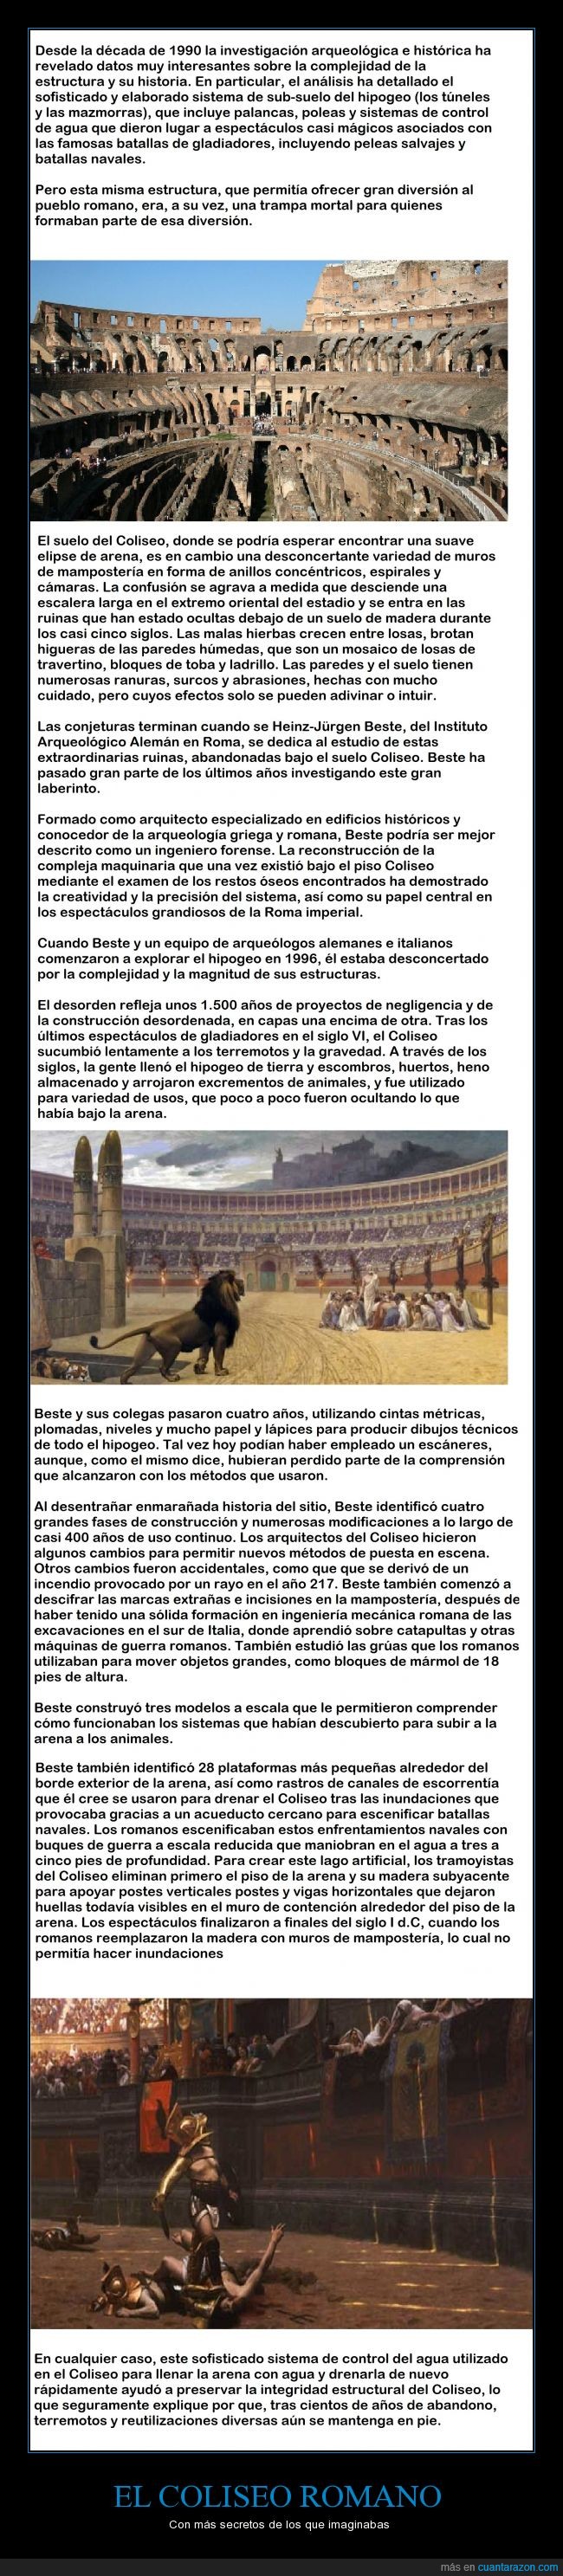 Coliseo romano,Roma,Beste,investigación,naumaquias,interior,romanos